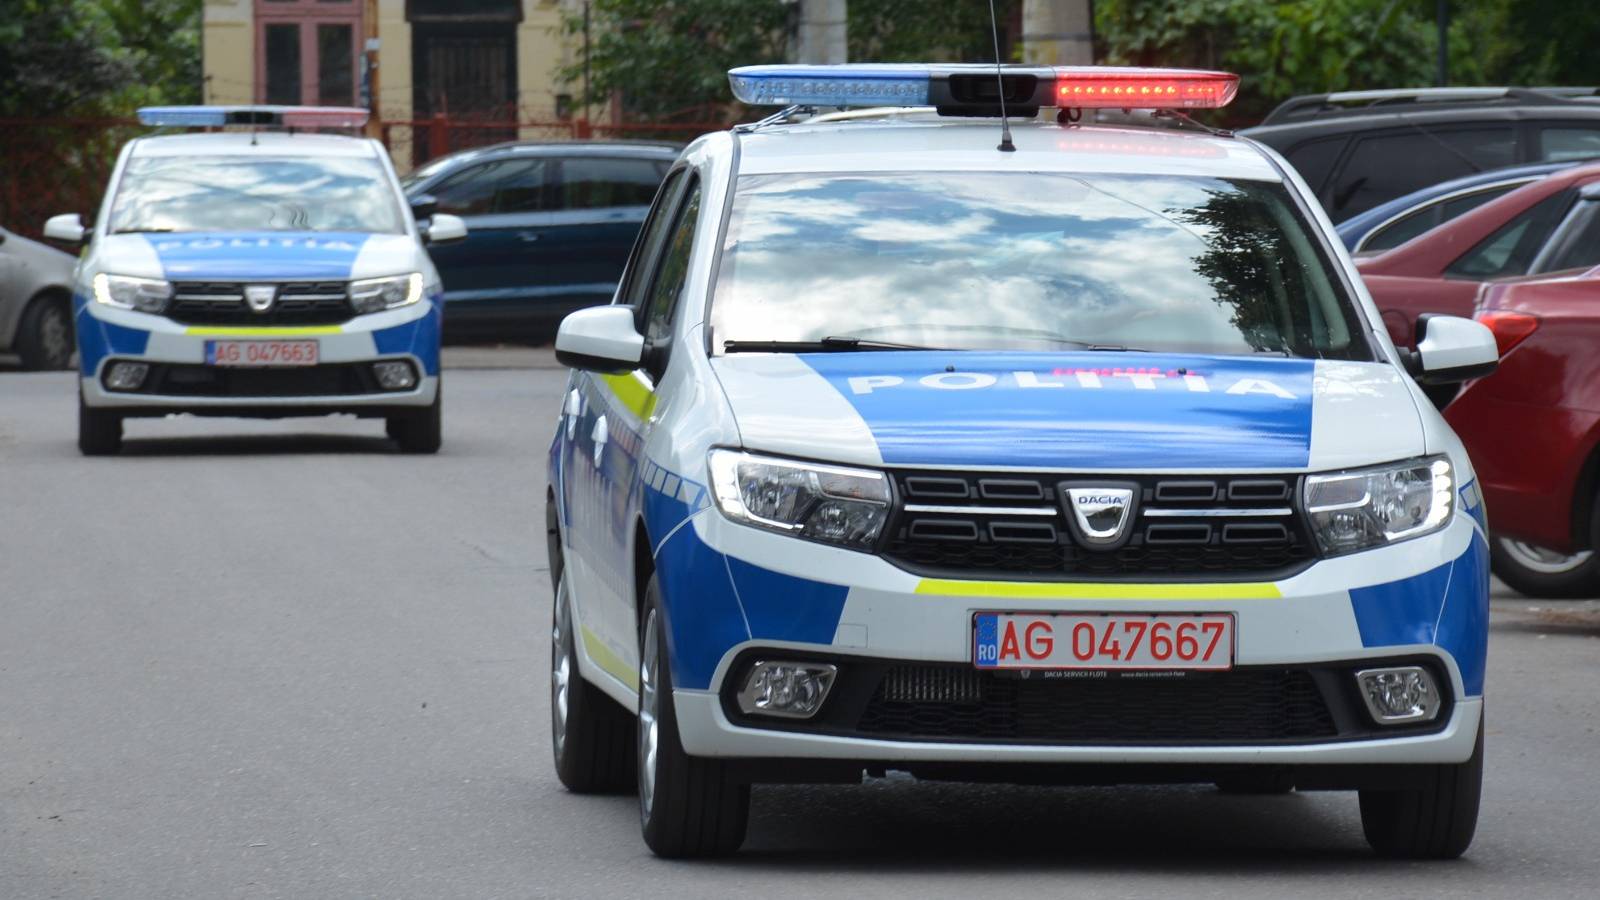 Police roumaine Saisie de drogue Roumanie